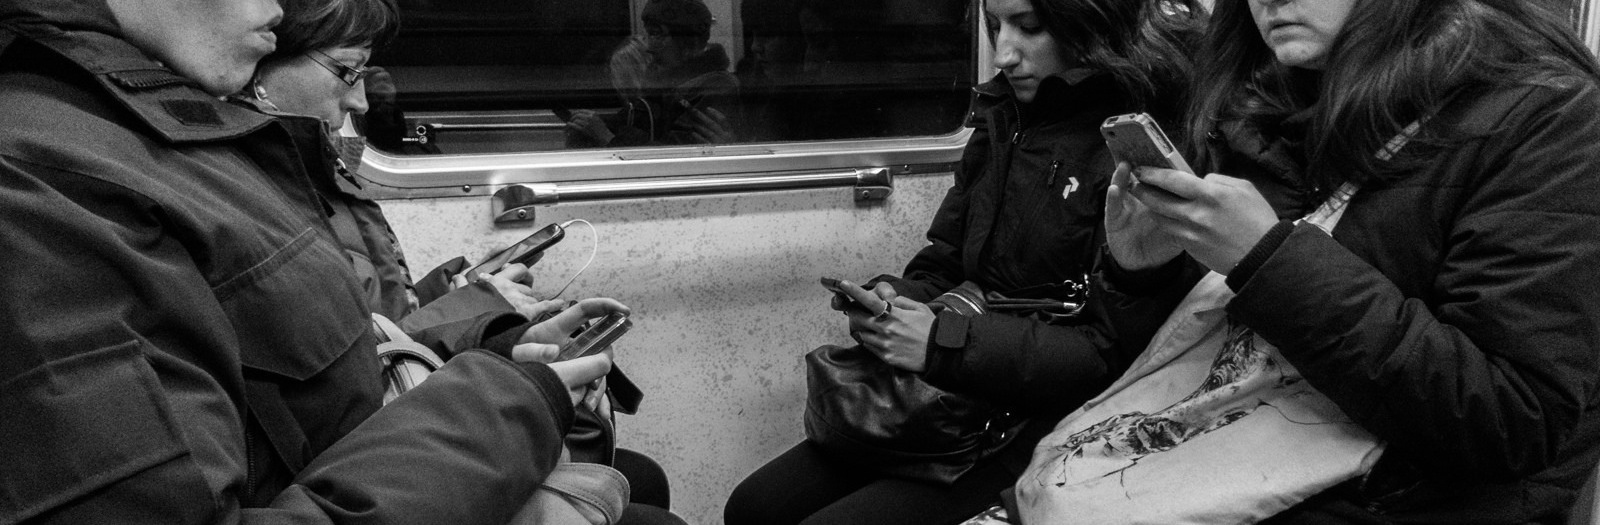 Staring at phones on the subway